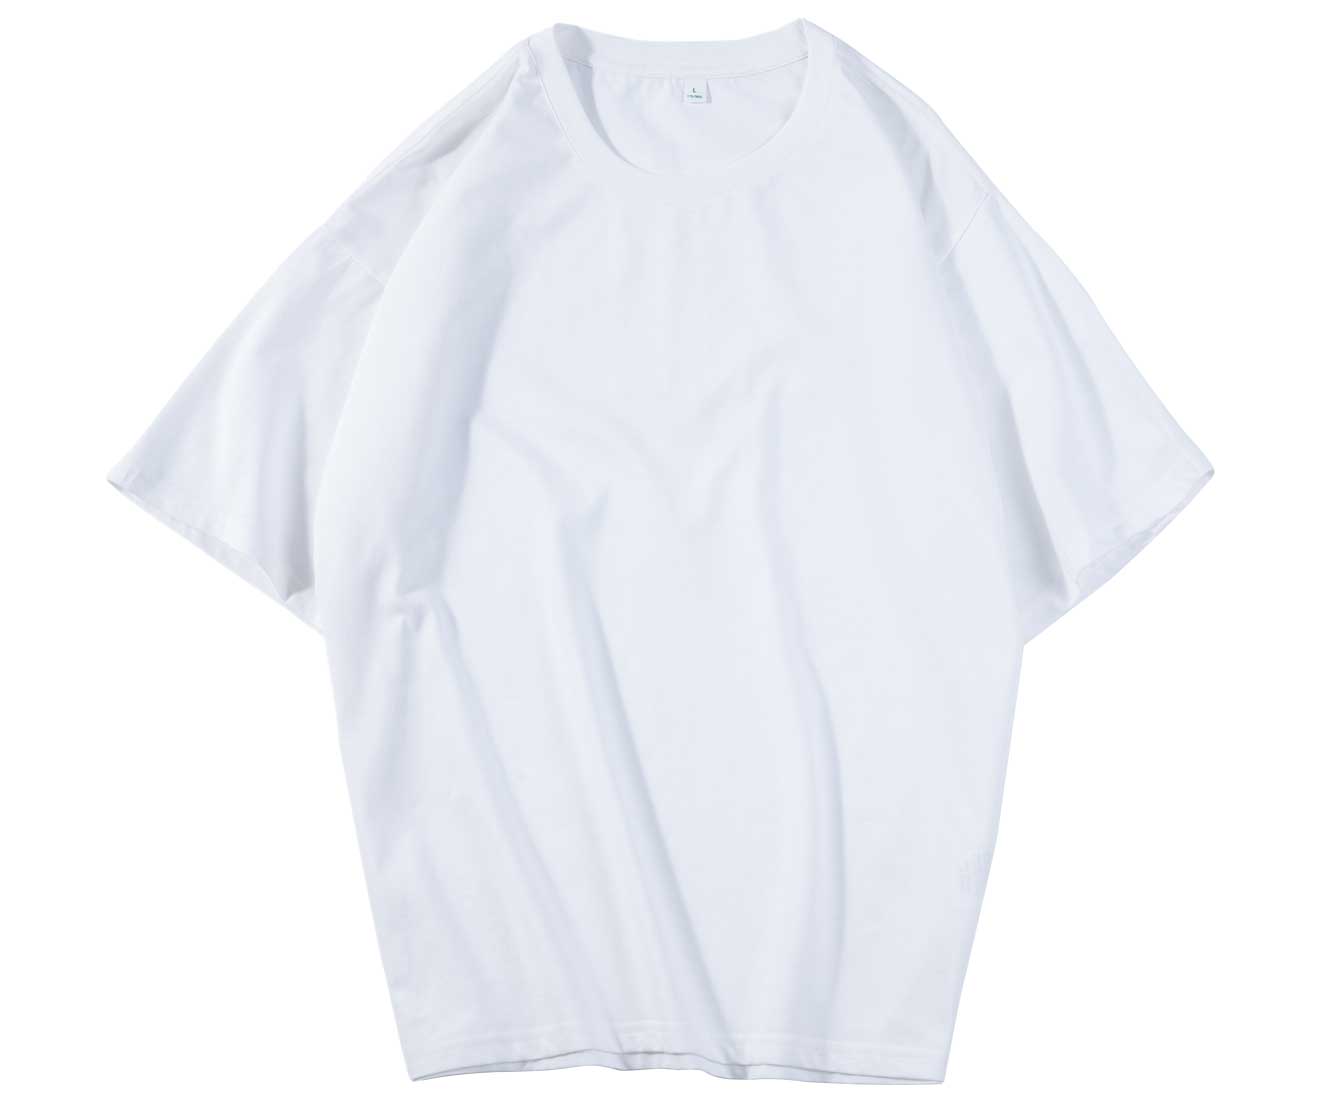 Organic Cotton White T Shirt Women's